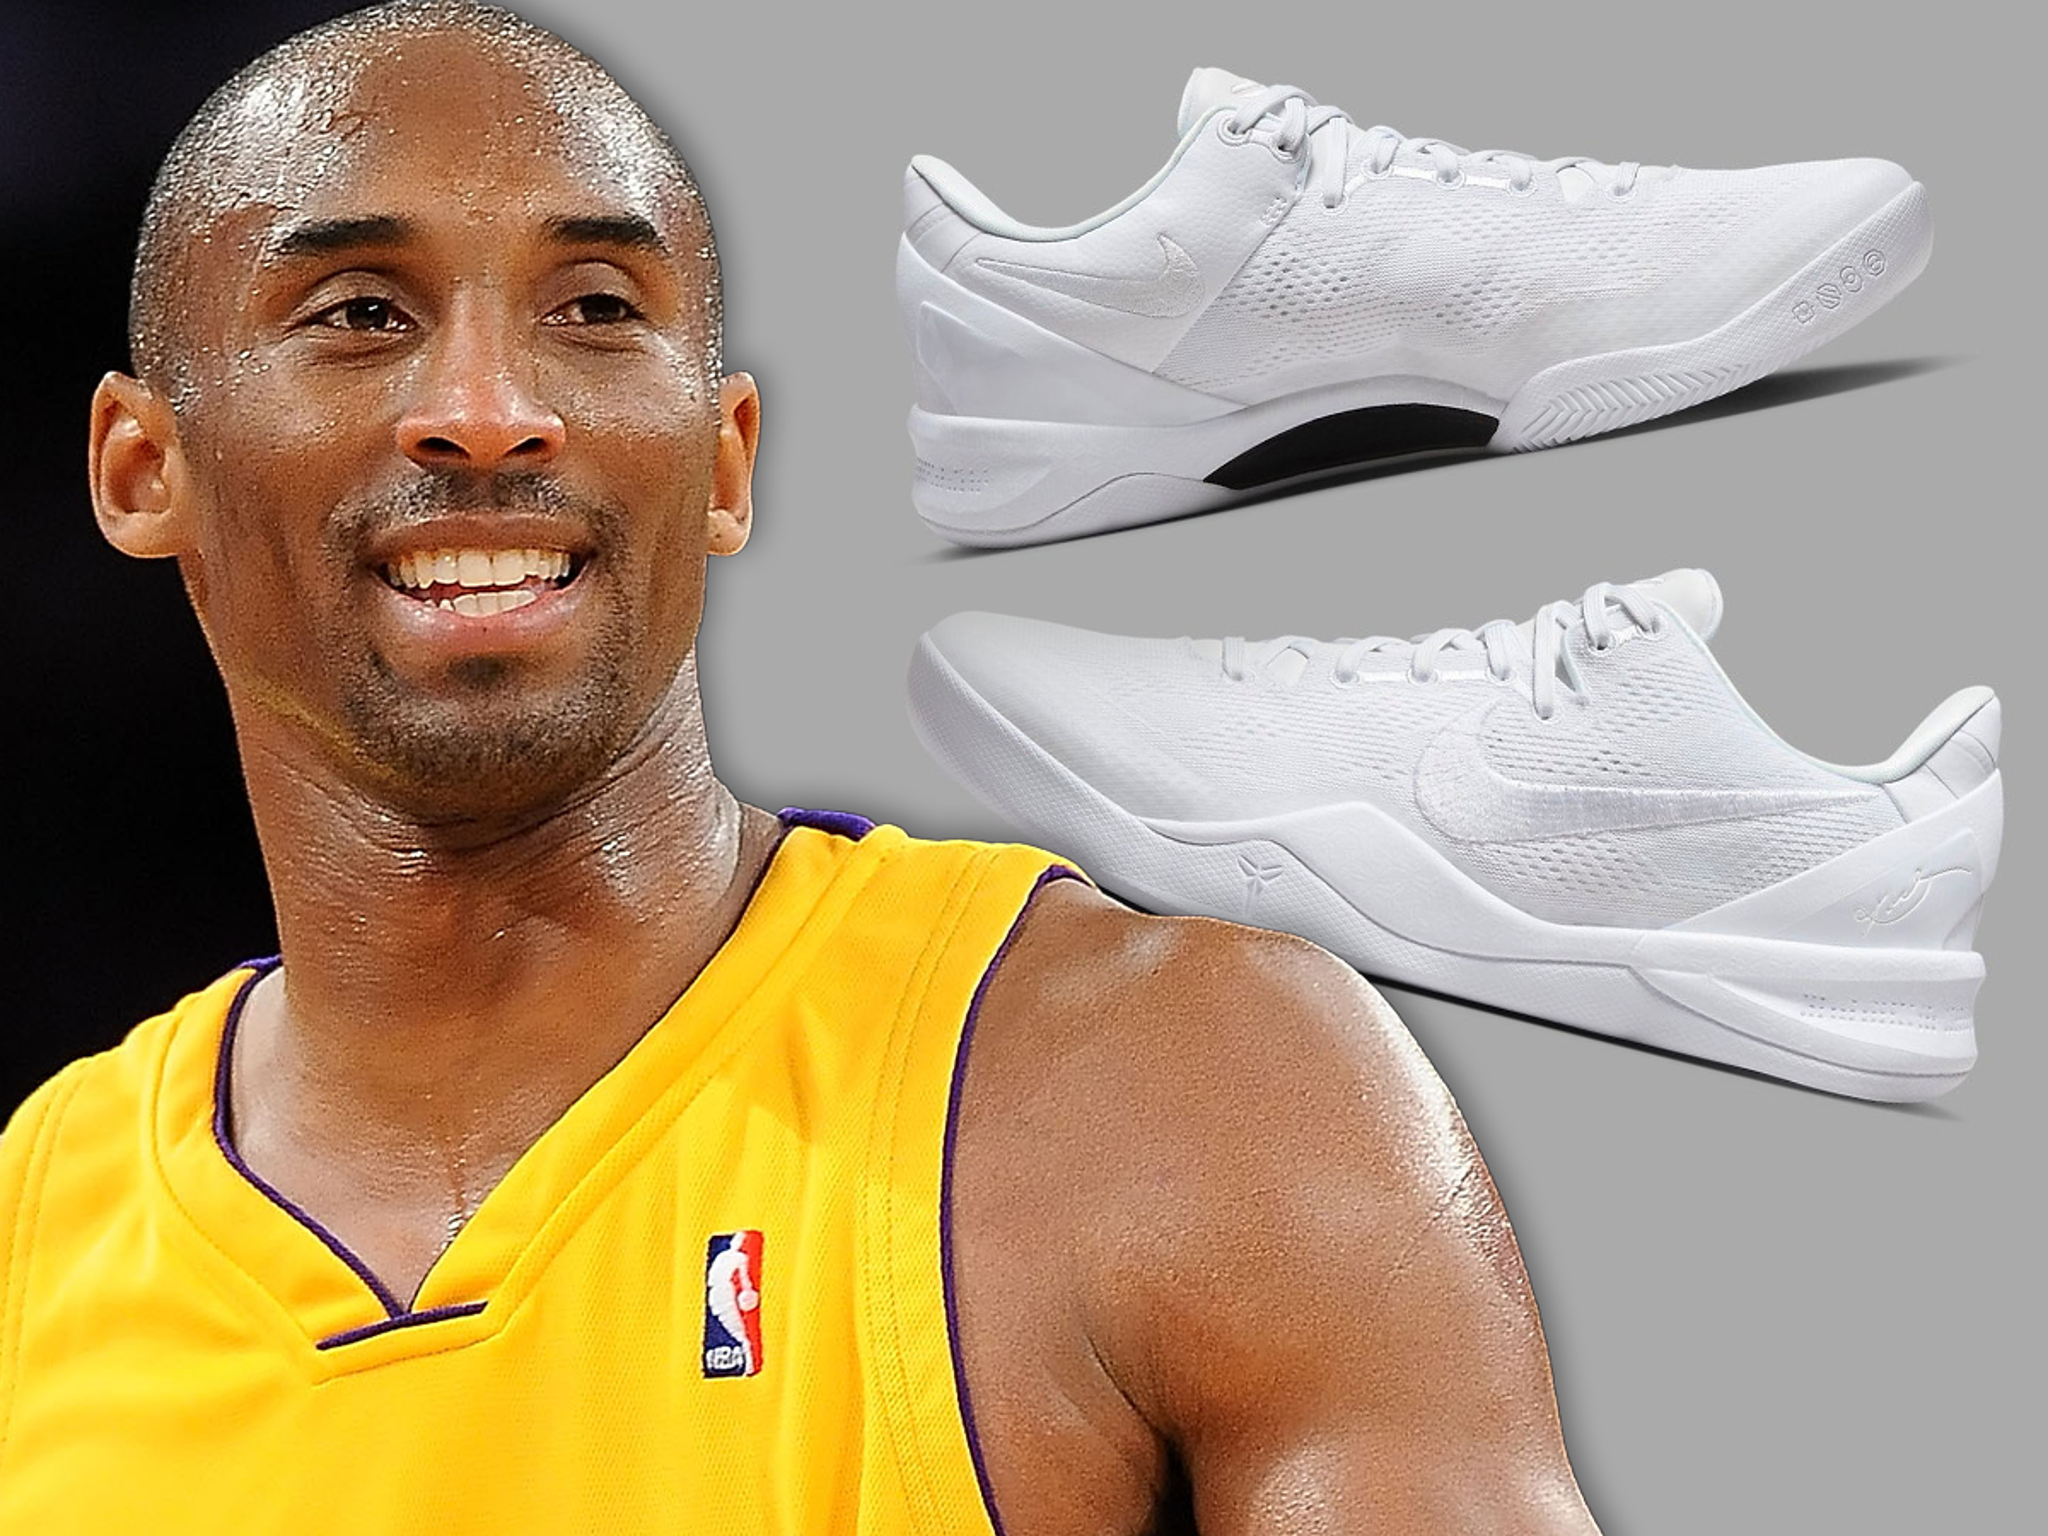 Vanessa Bryant designs Nike show to launch on Kobe's 45th birthday